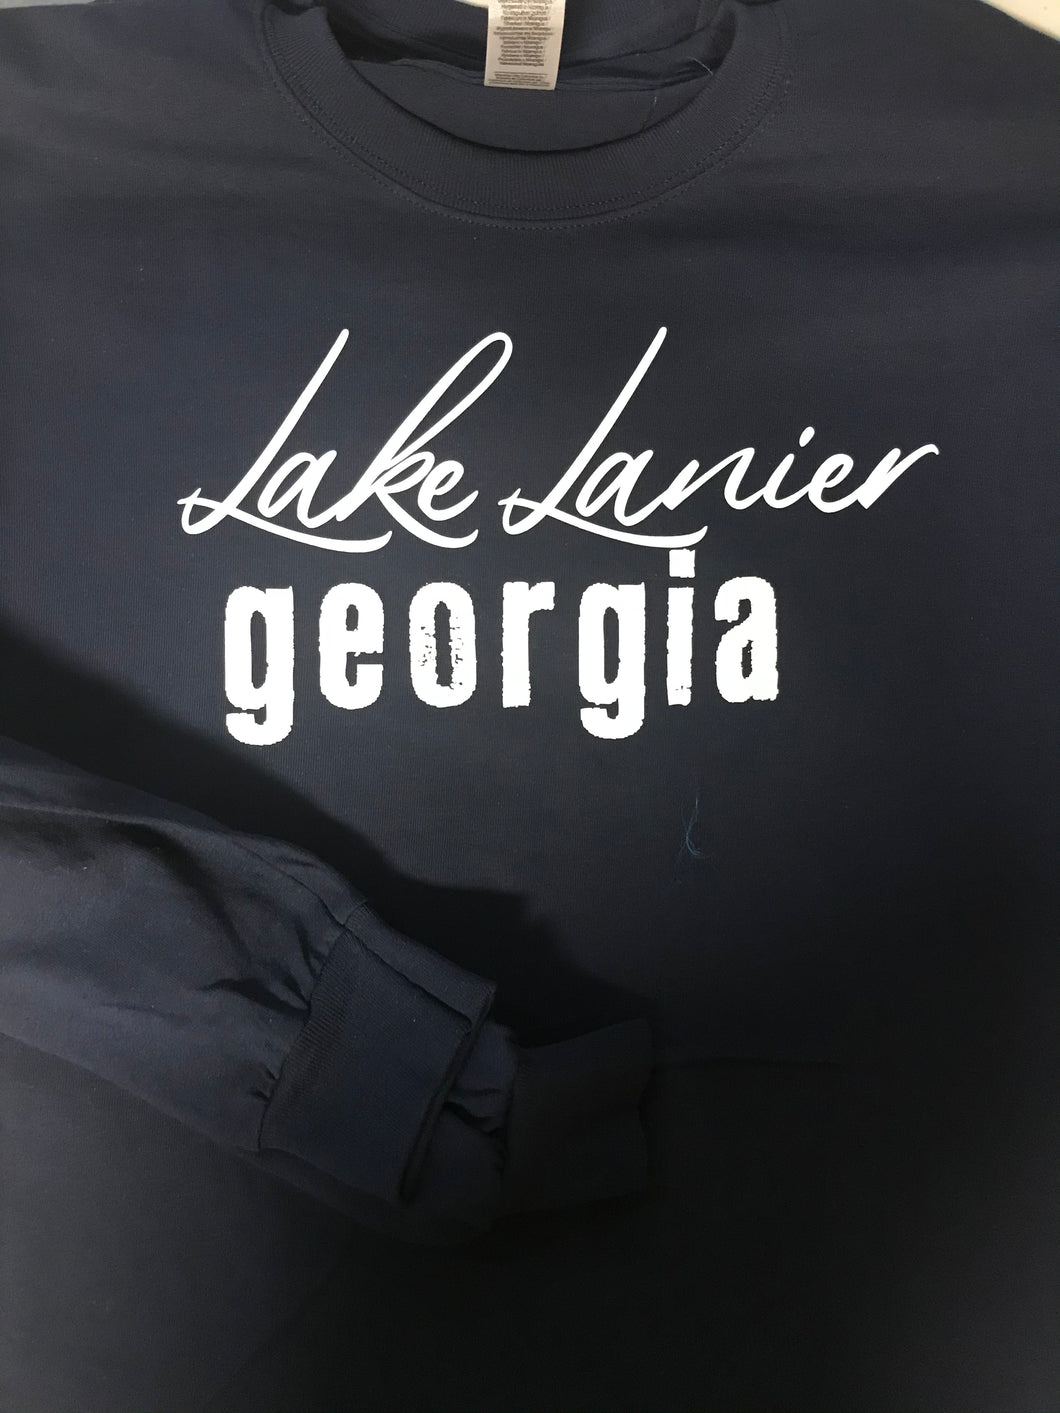 * NEW “Lake Lanier Georgia”